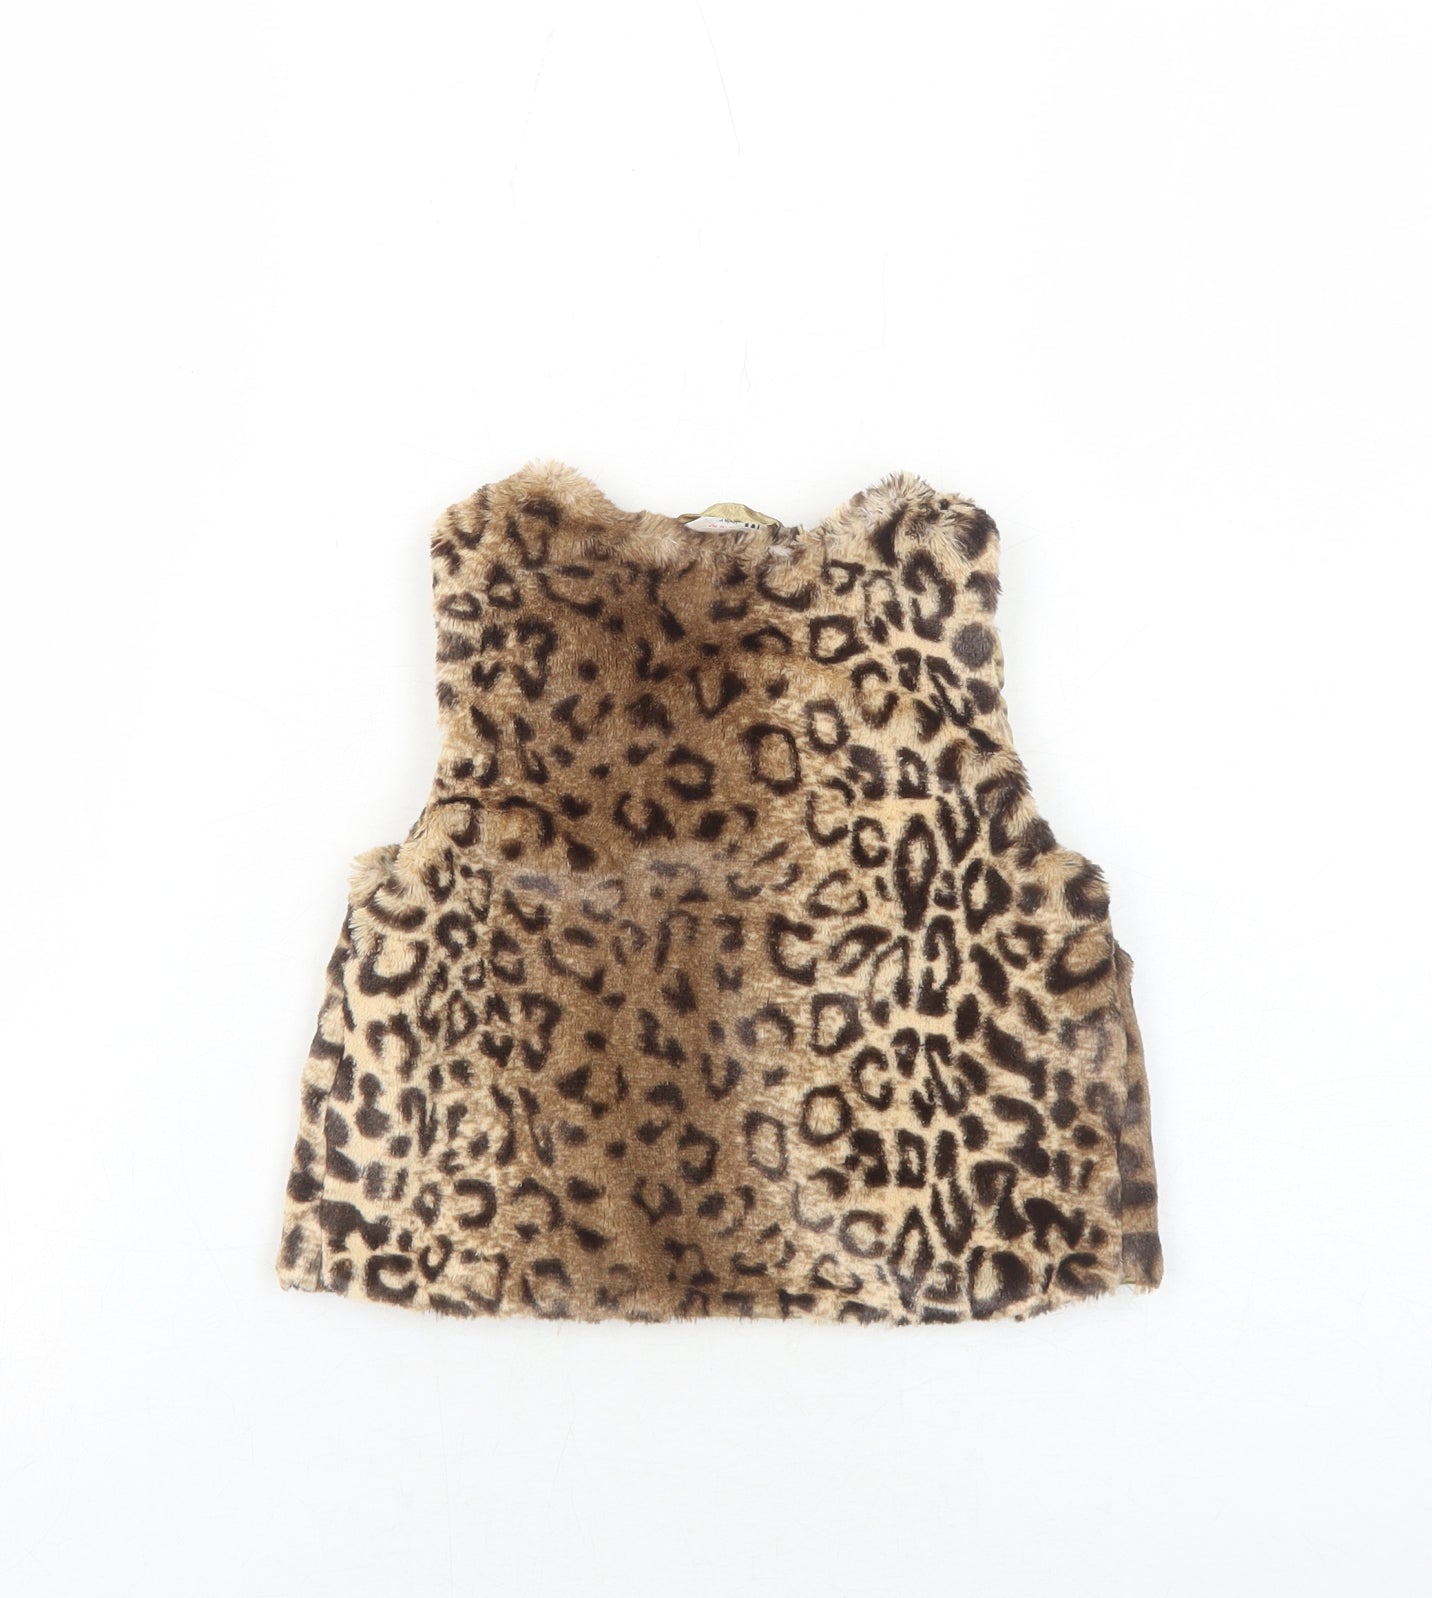 H&M Girls Brown Animal Print Gilet Jacket Size 4-5 Years Button - Leopard Print